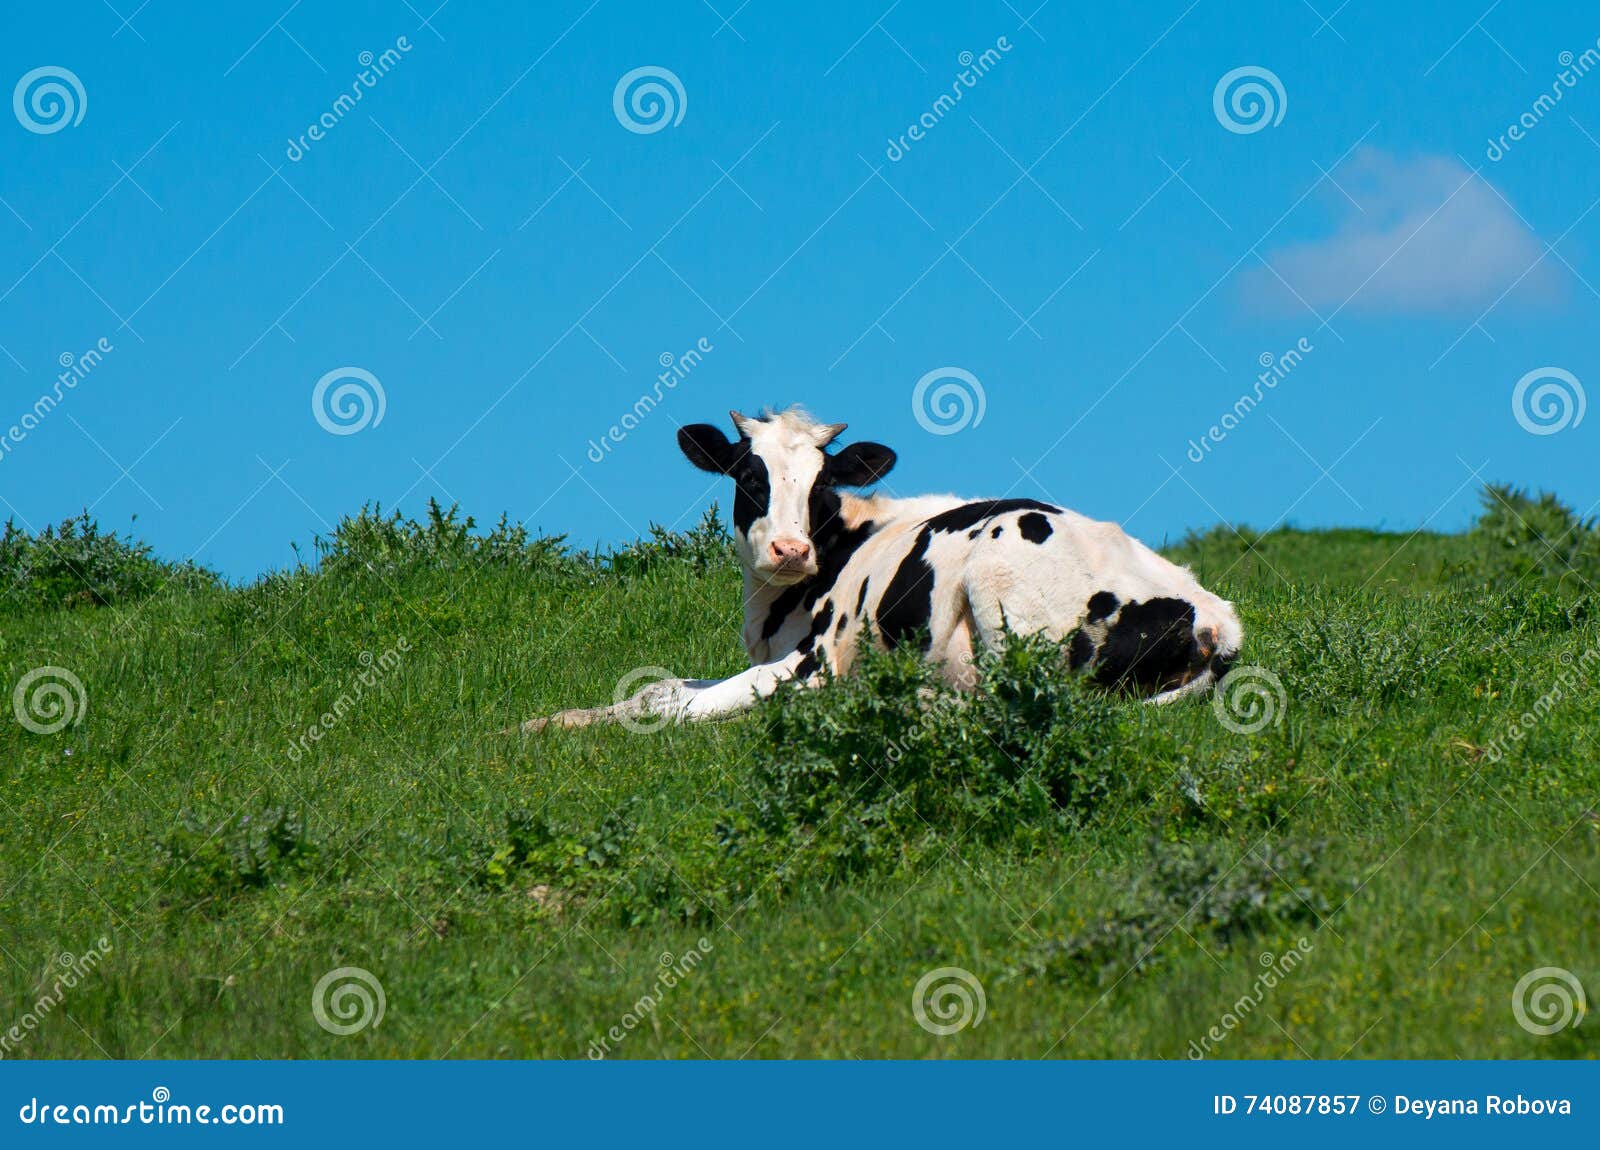 Cow on green meadow. stock image. Image of farmland, livestock - 74087857